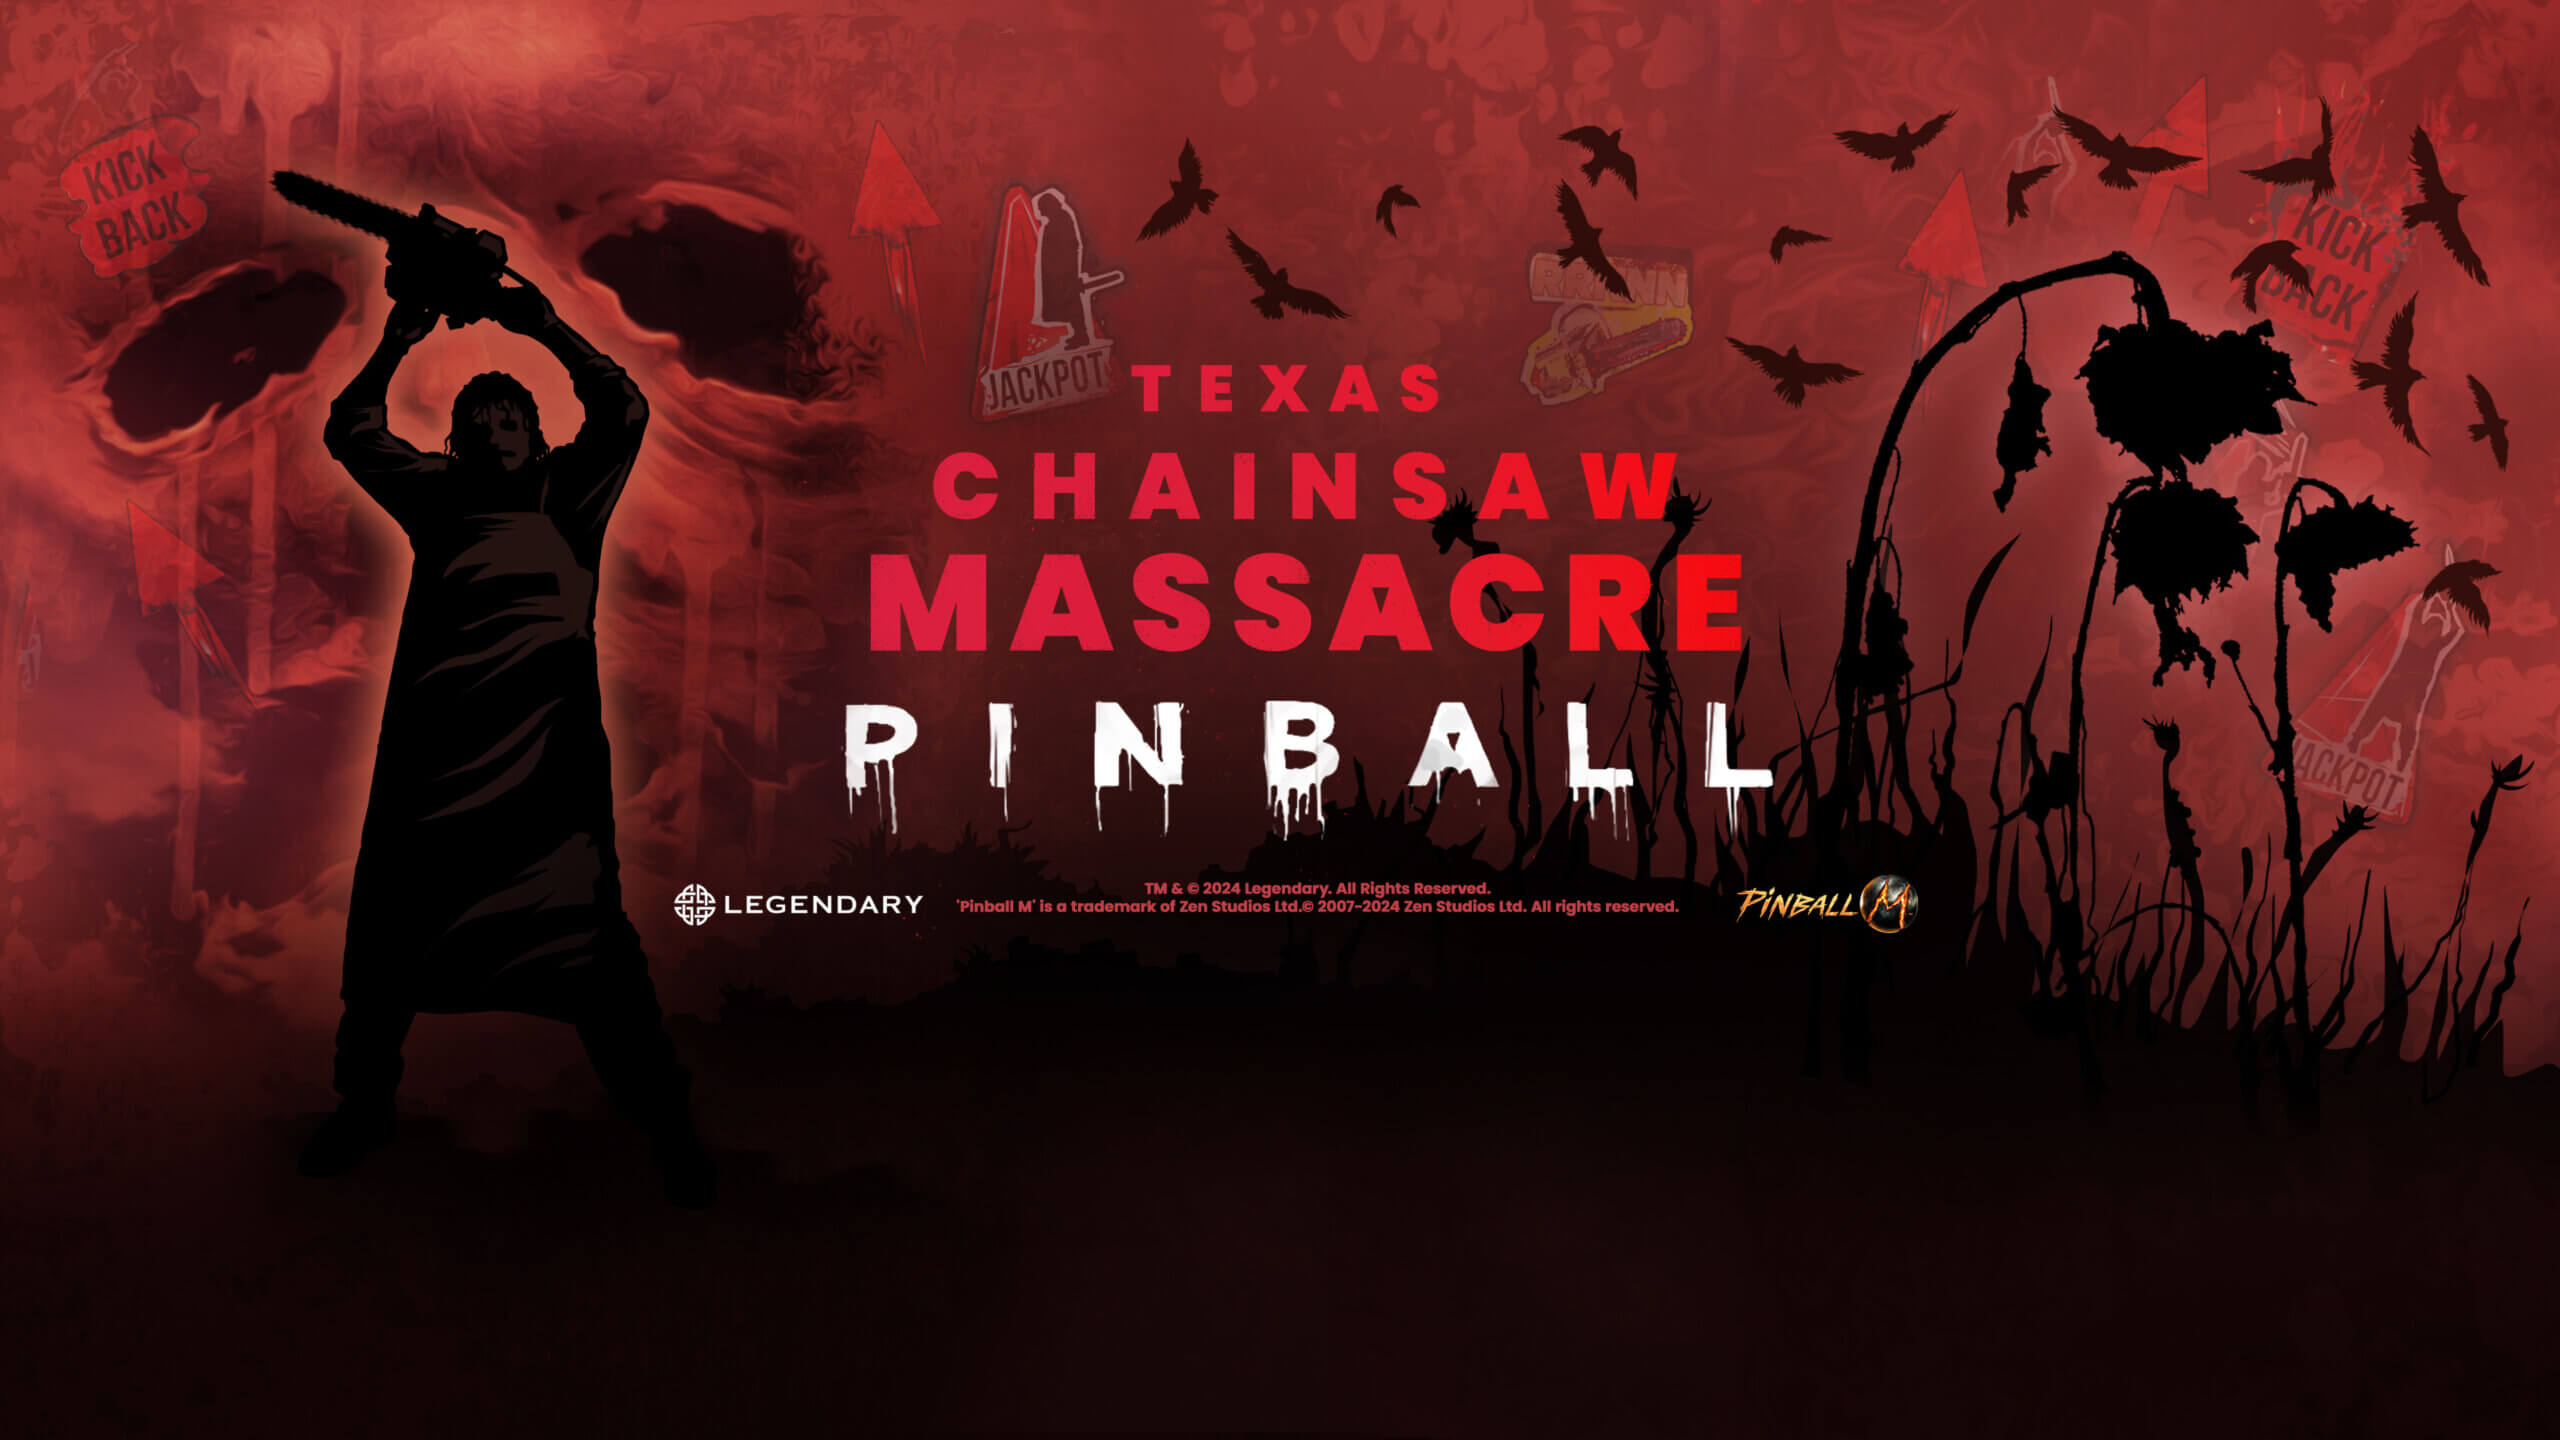 Texas Chainsaw Massacre Pinball